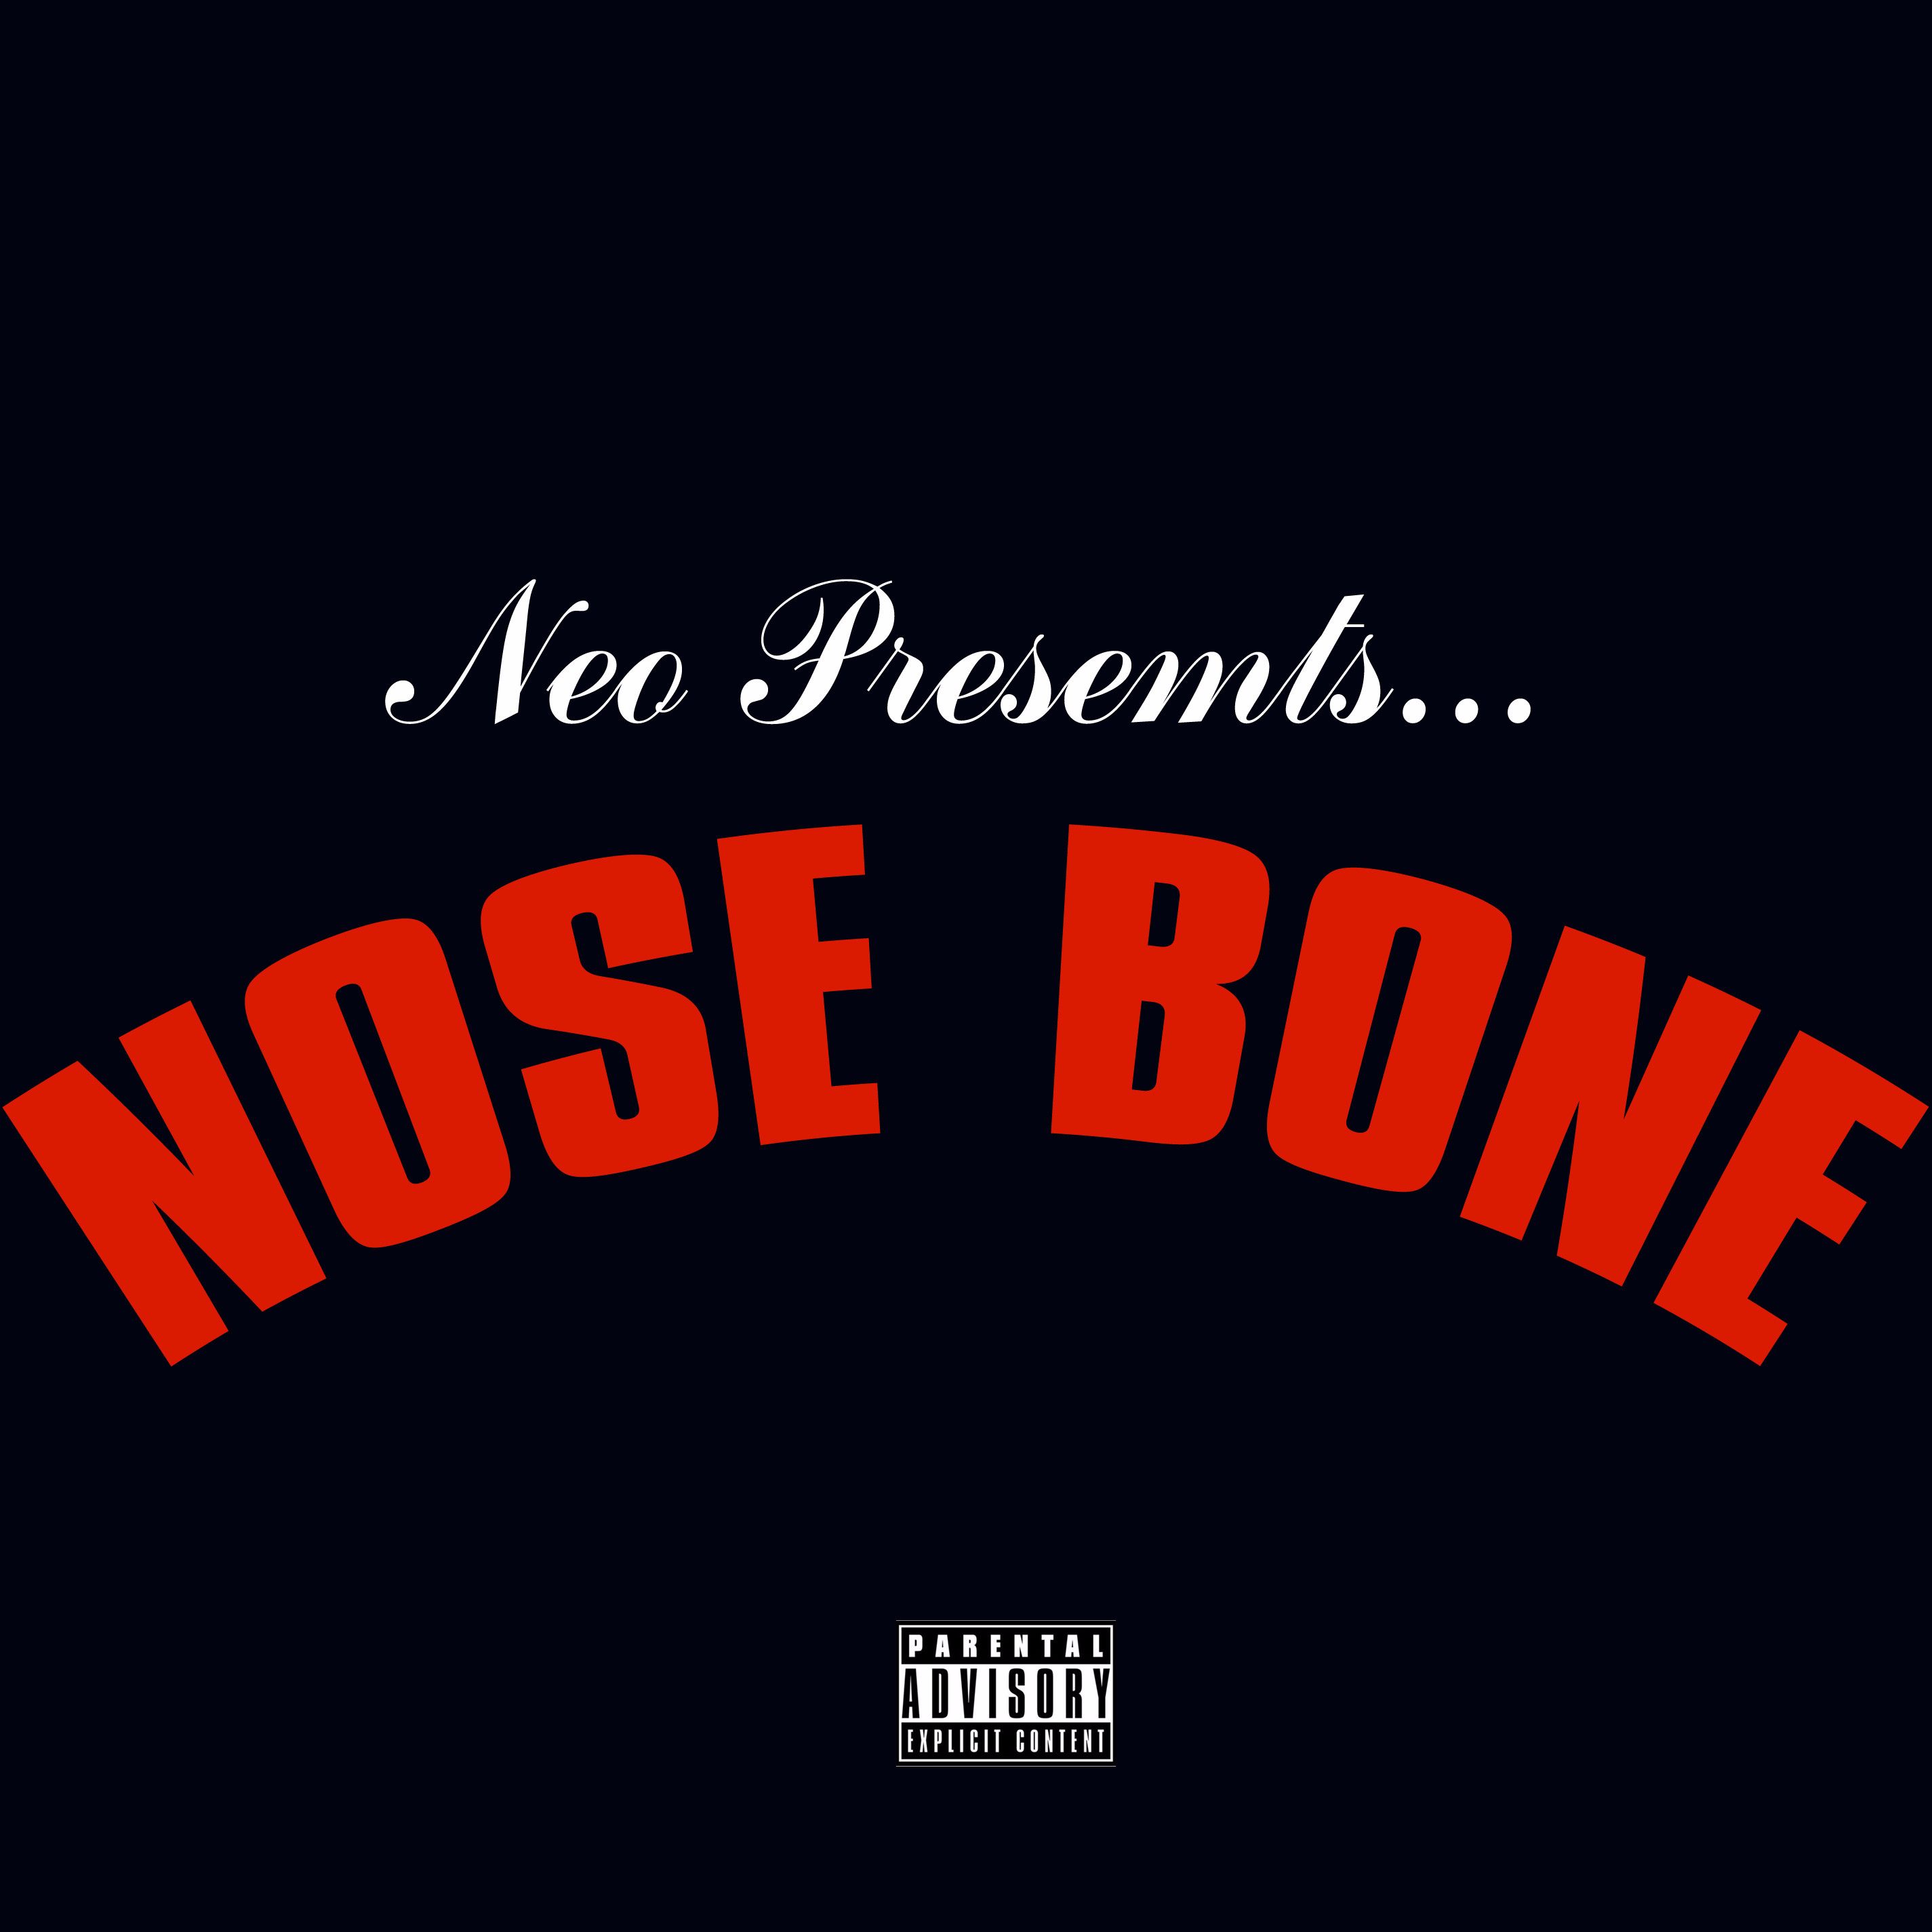 NeodotcoM – “Nose Bone”